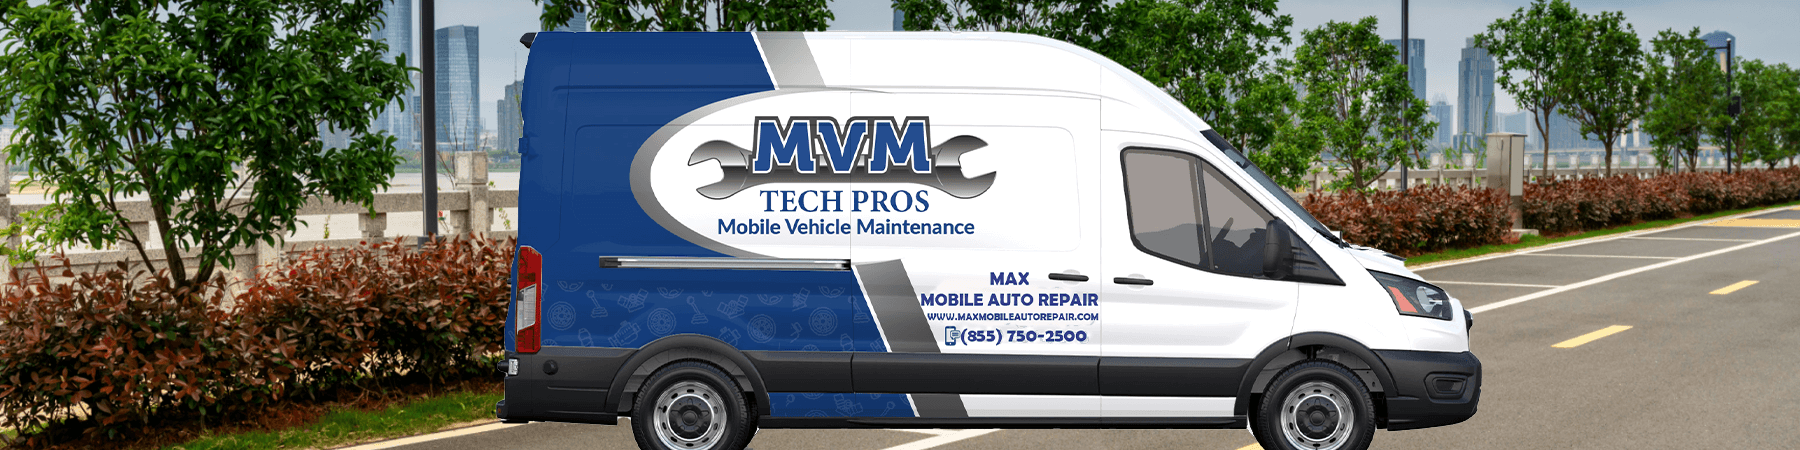 mvm tech pros services